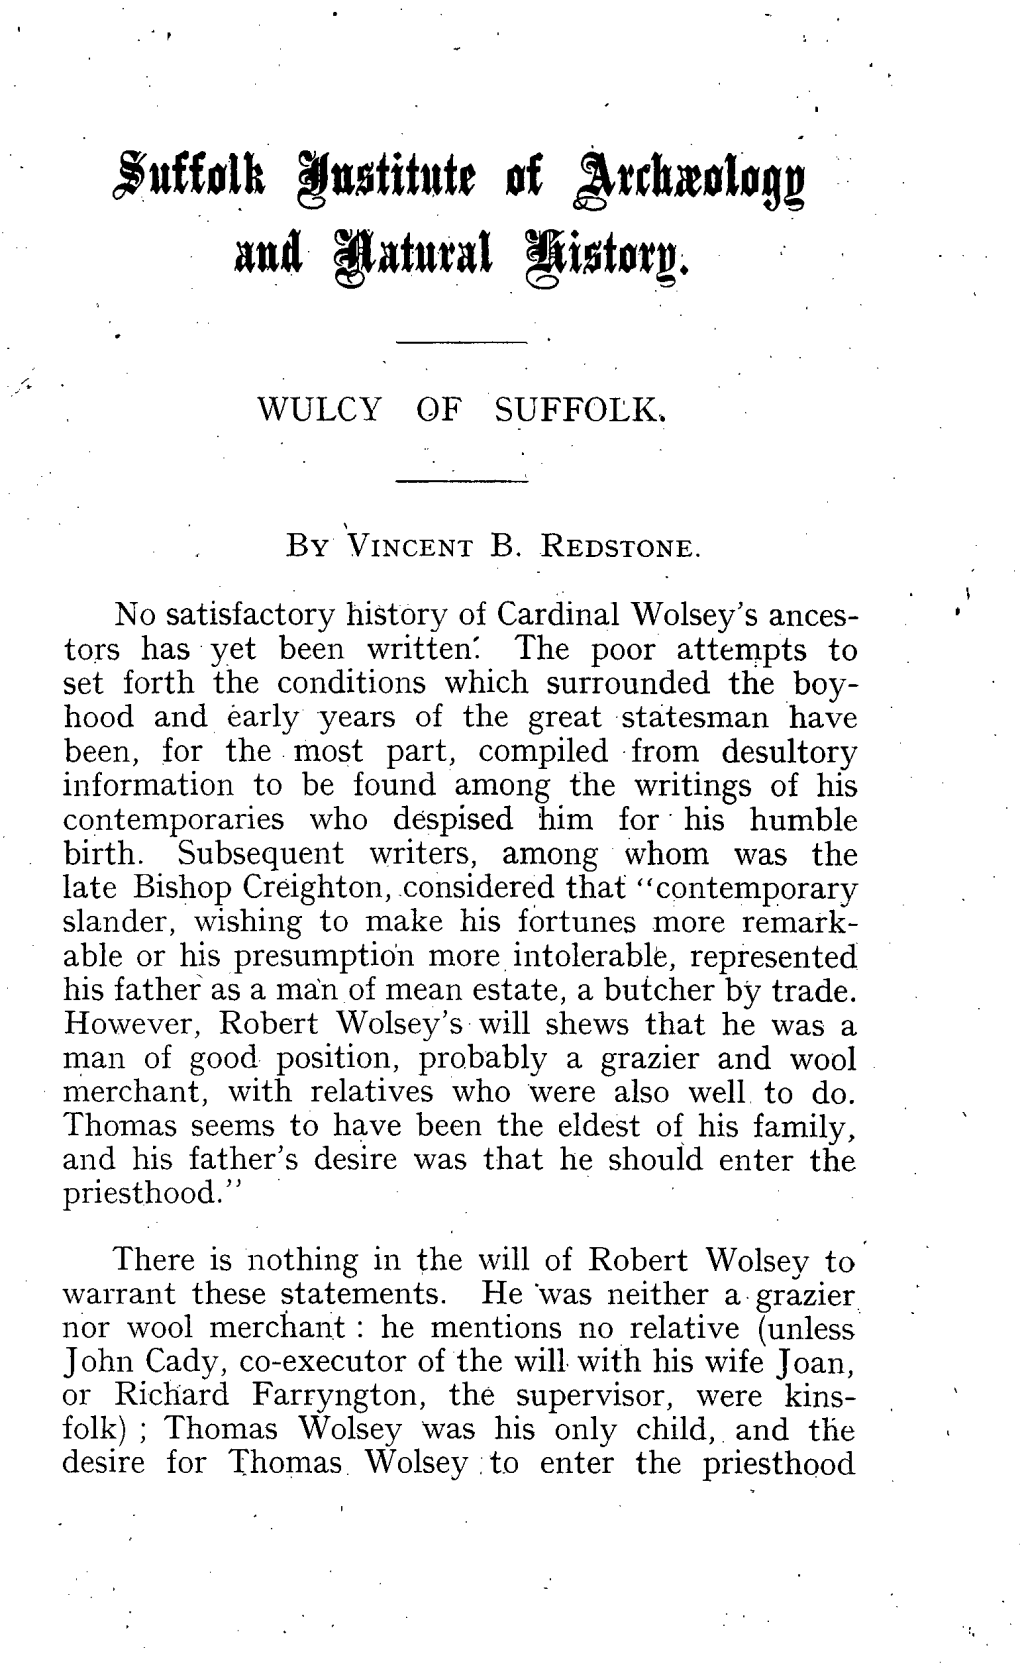 Wulcy of Suffolk V. B. Redstone